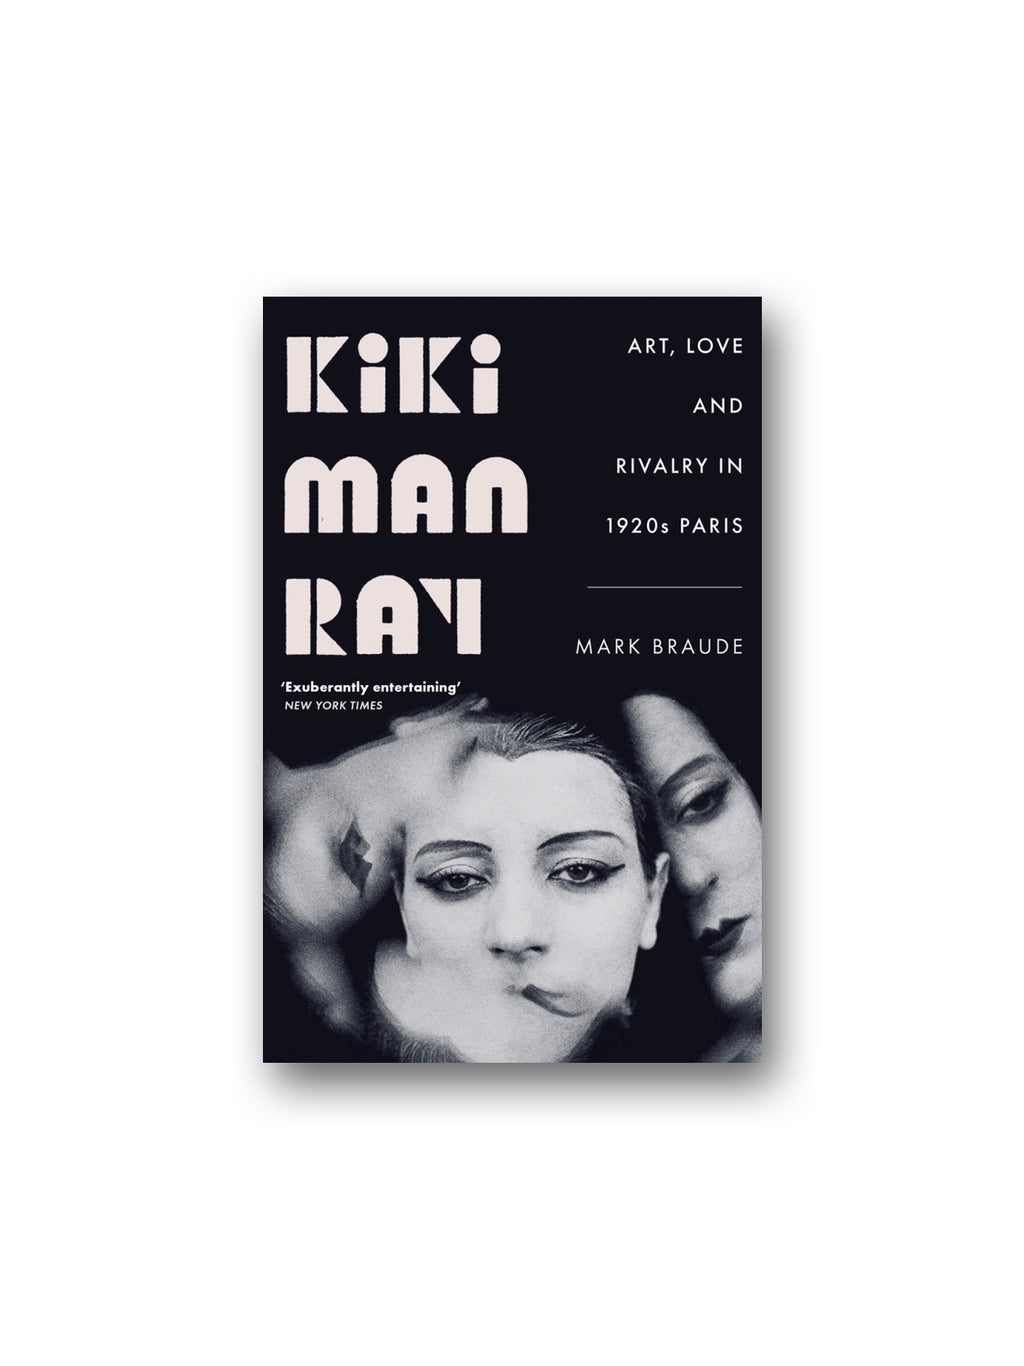 Kiki Man Ray: Art, Love and Rivalry in 1920s Paris